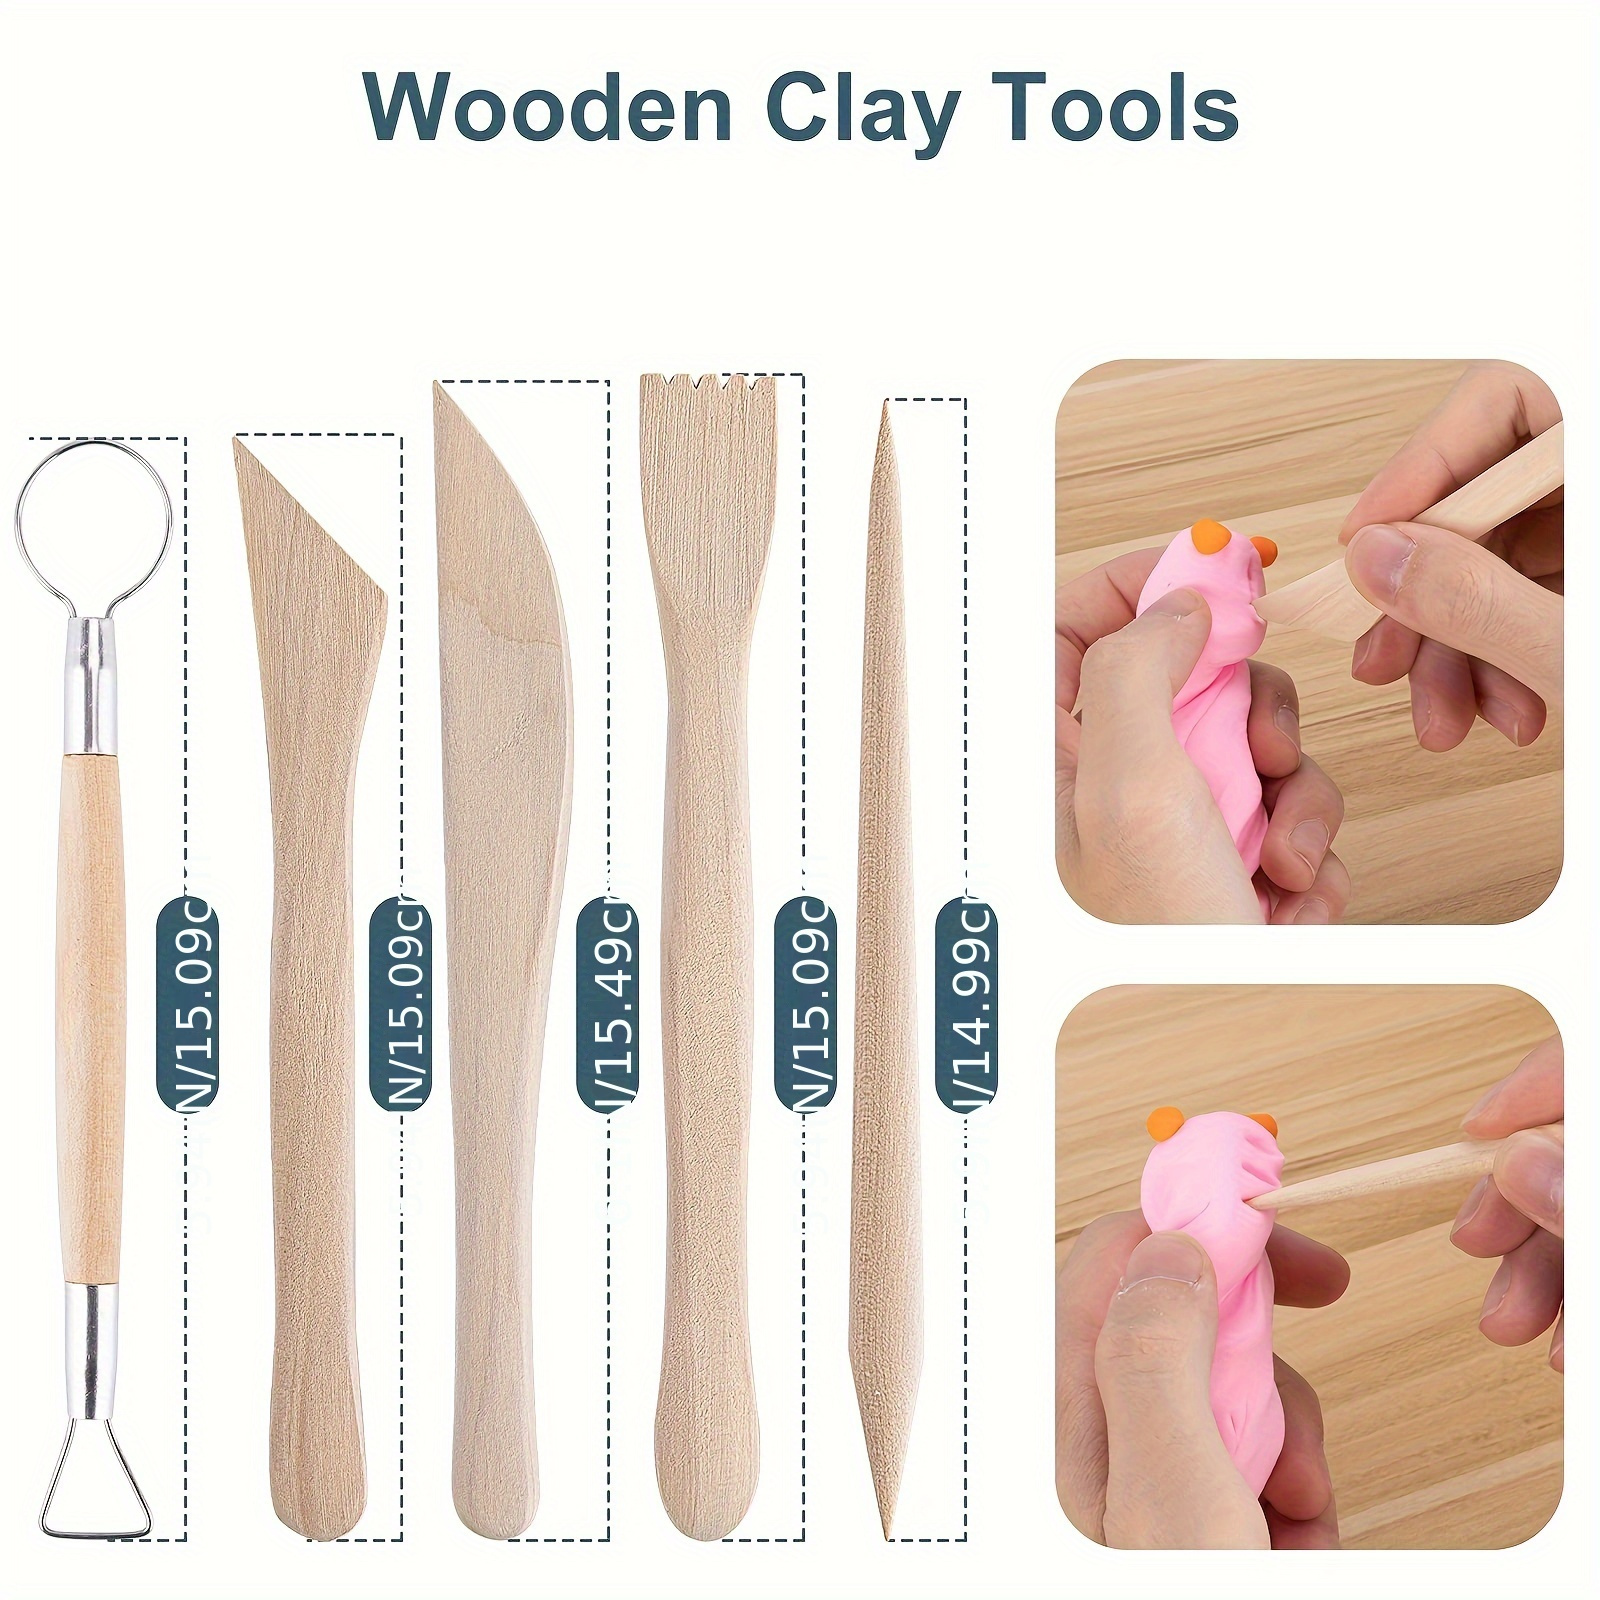 8pcs Clay Tools Kit, Polymer Clay Tools, Ceramics Clay Sculpting Tools  Kits, Air Dry Clay Tool Set For Adults Pottery Craft, Baking, Carving,  Dotting